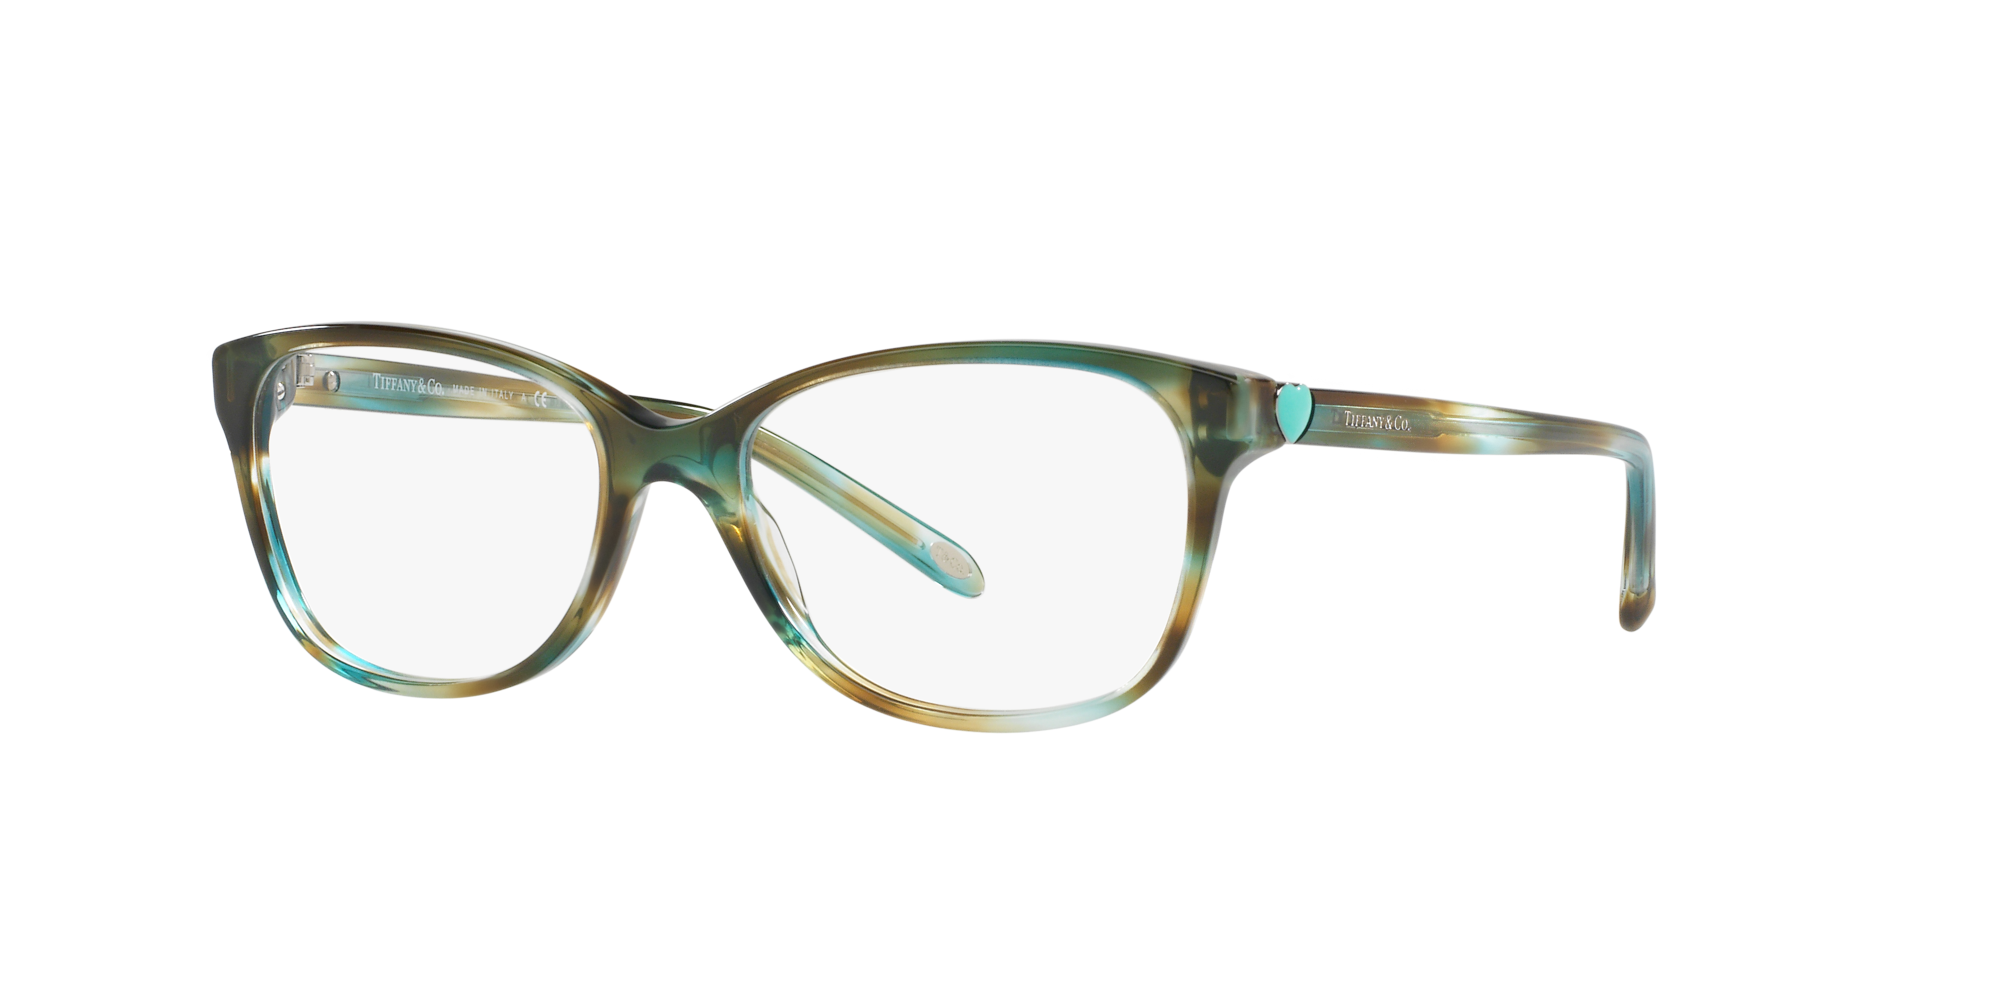 tiffany sunglasses lenscrafters